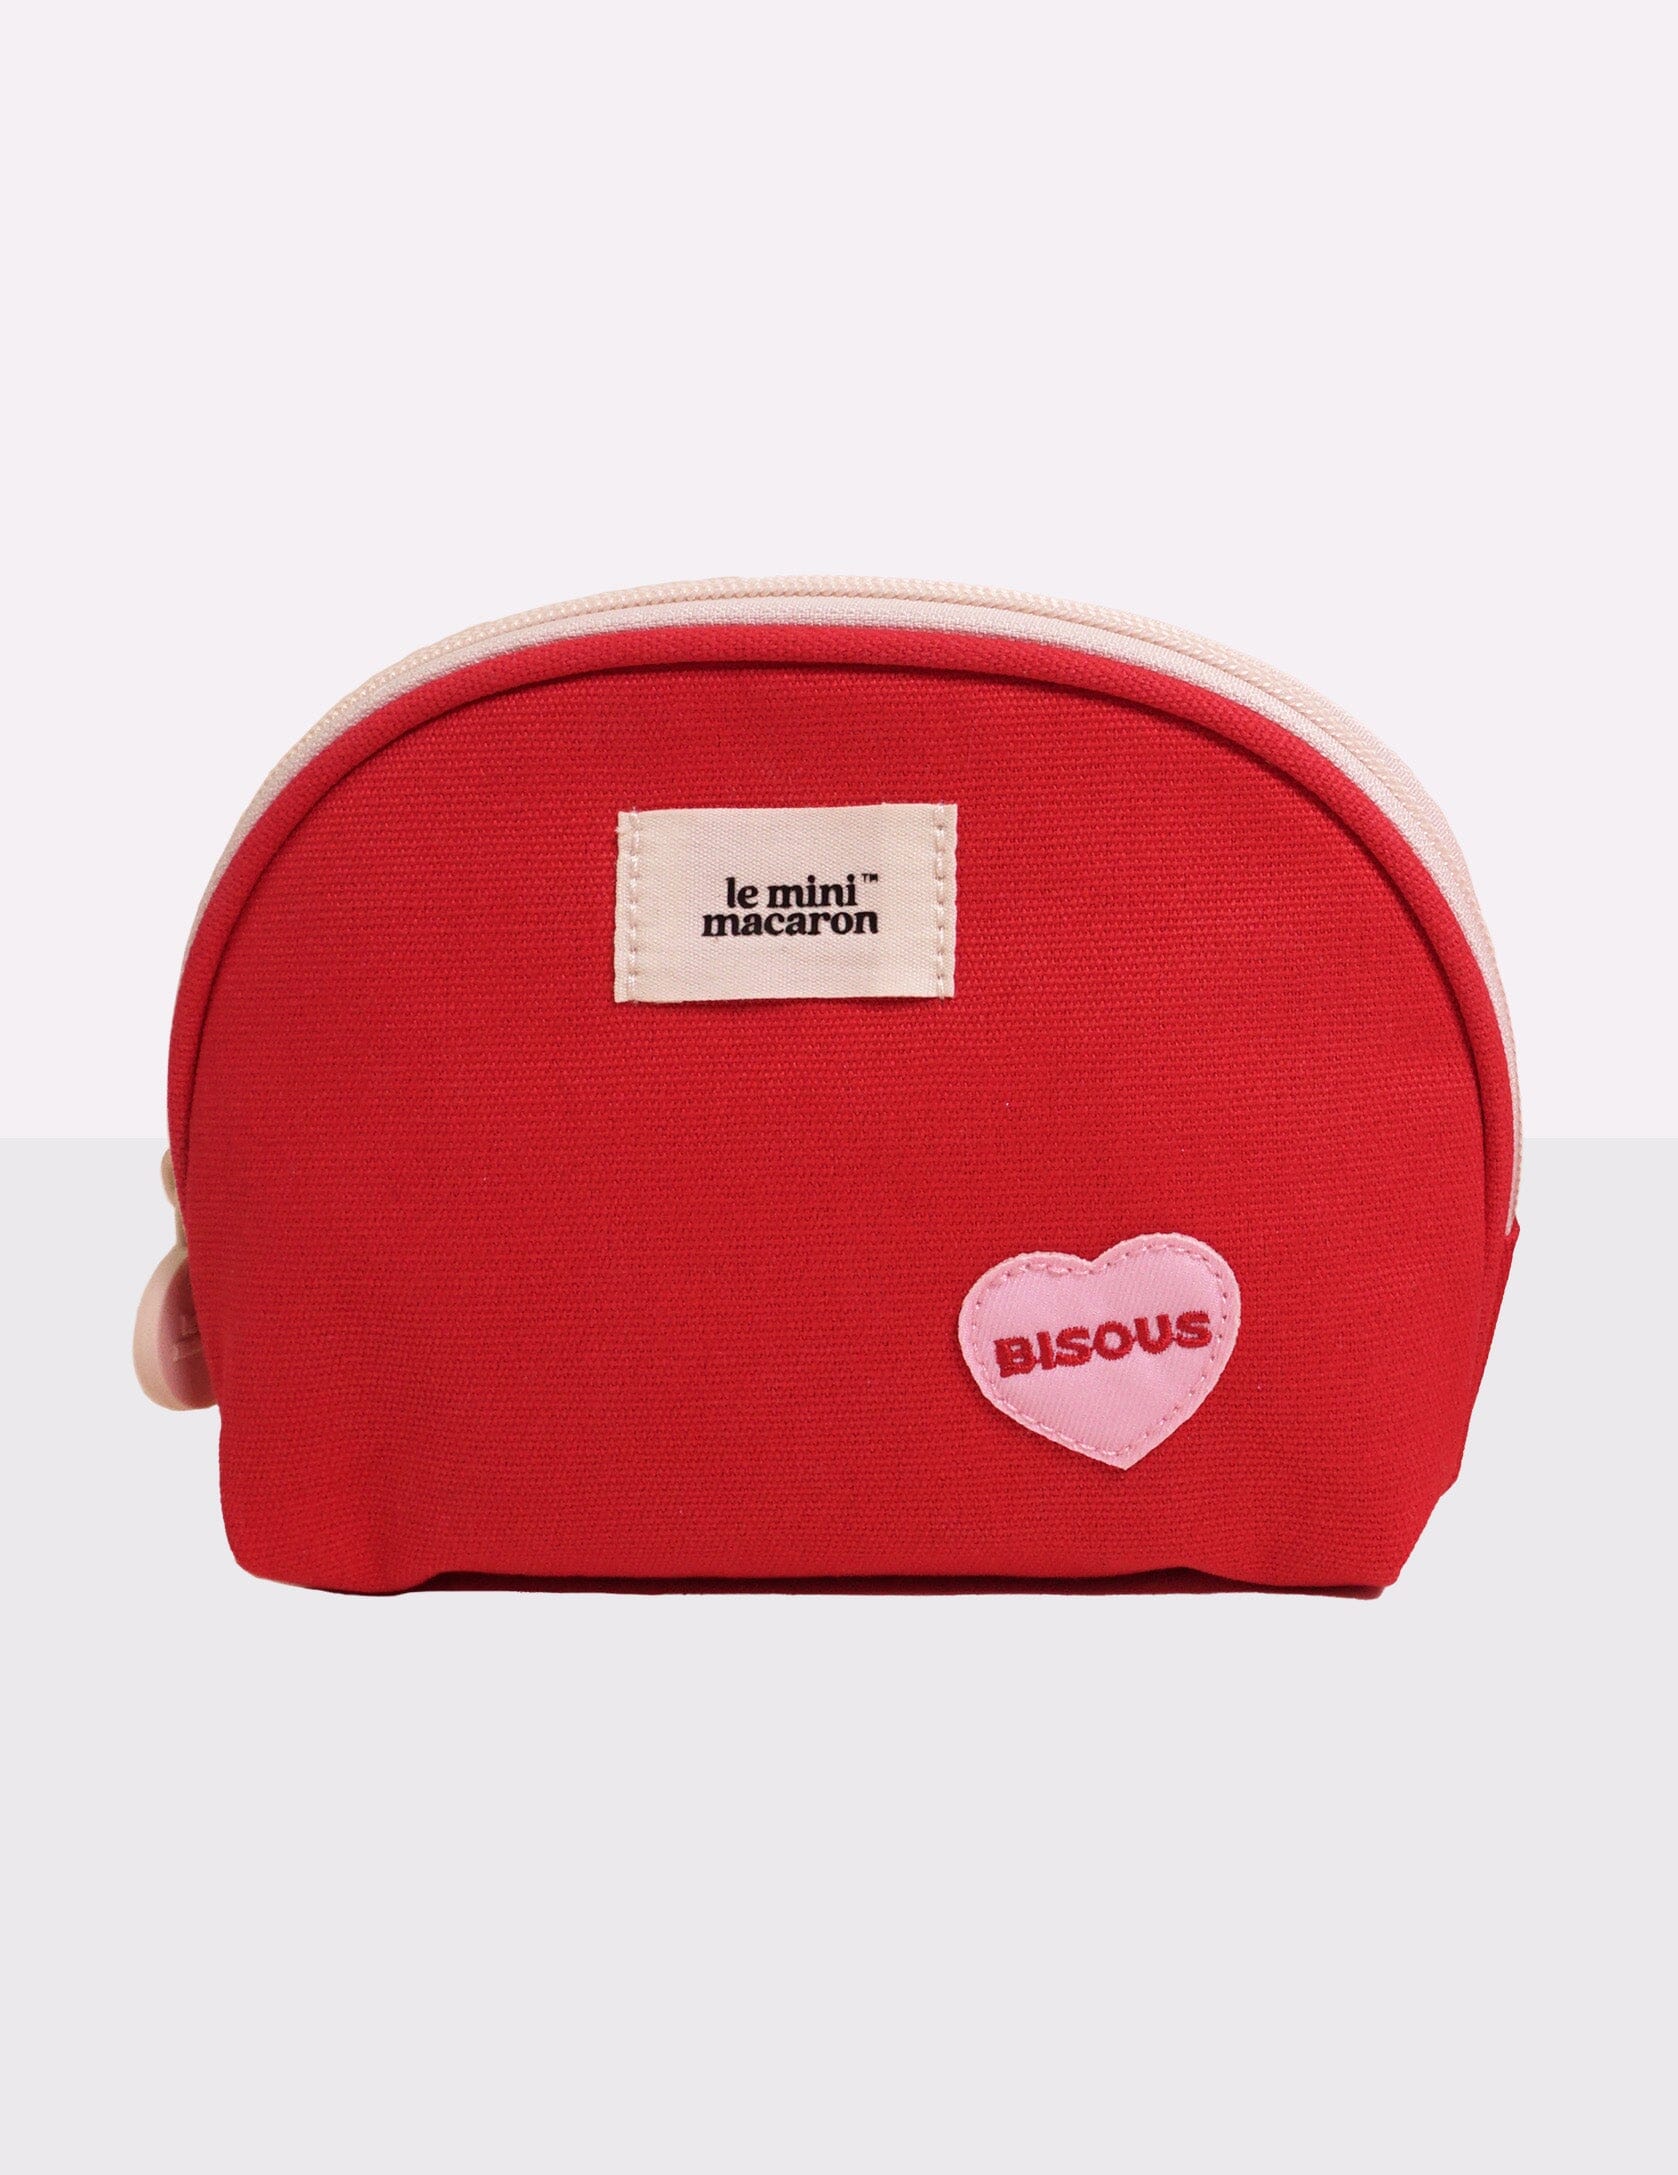 Red cotton Bisous - Travel pouch - Le Mini Macaron